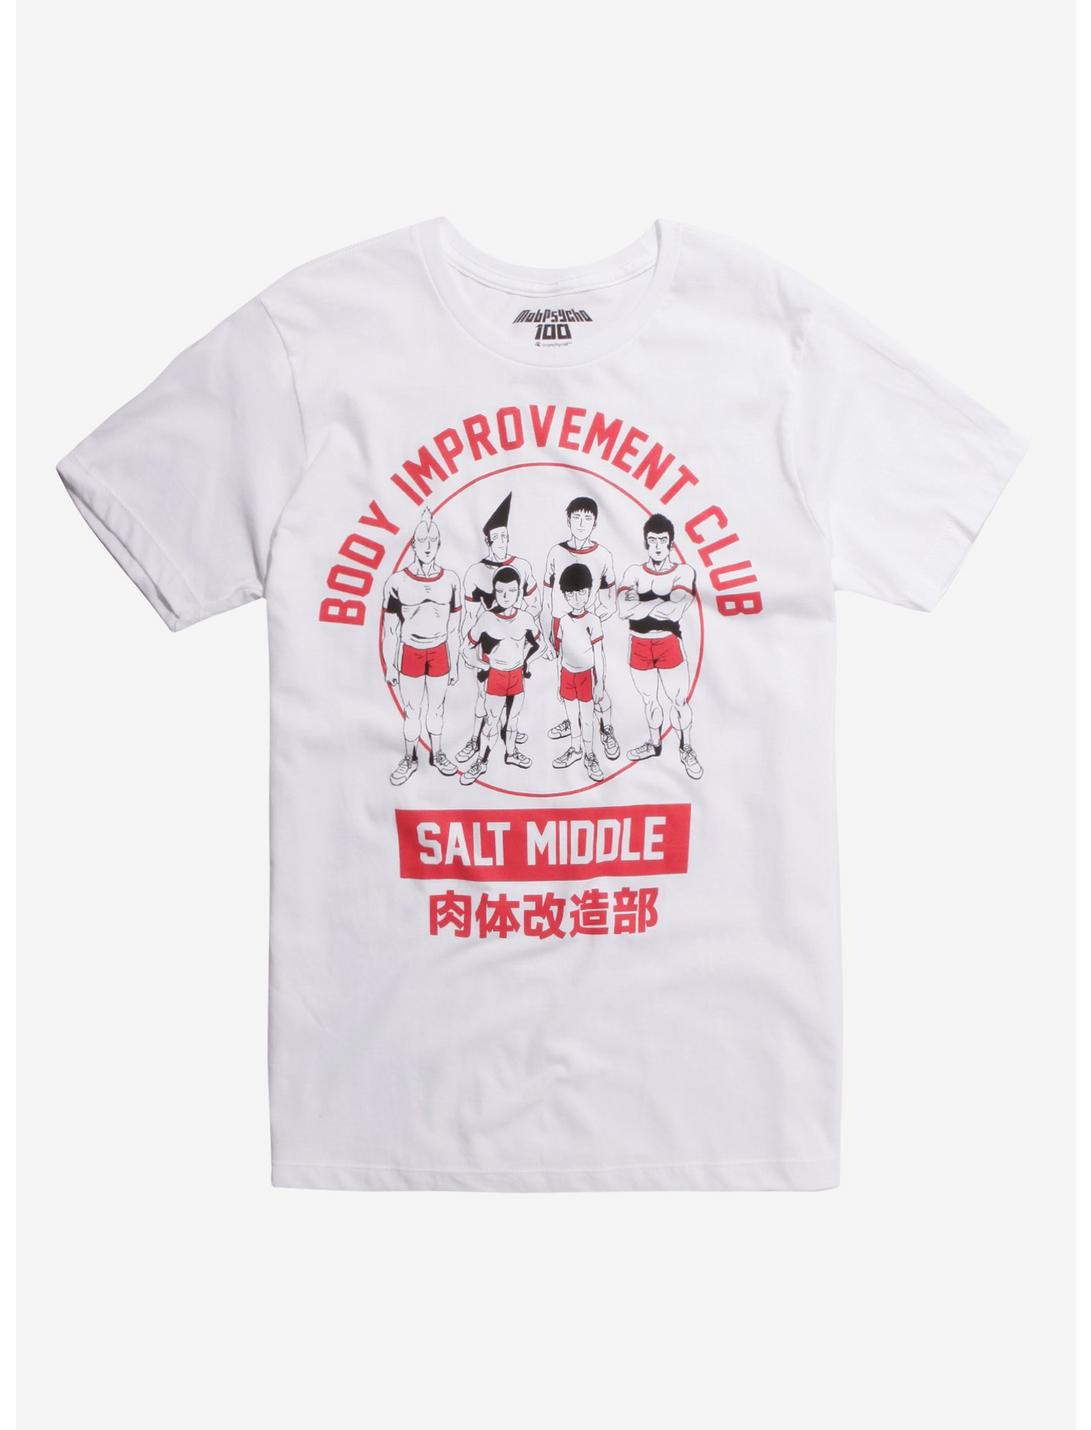 Mob Psycho 100 Body Improvement Club T-Shirt Hot Topic Exclusive, WHITE, hi-res